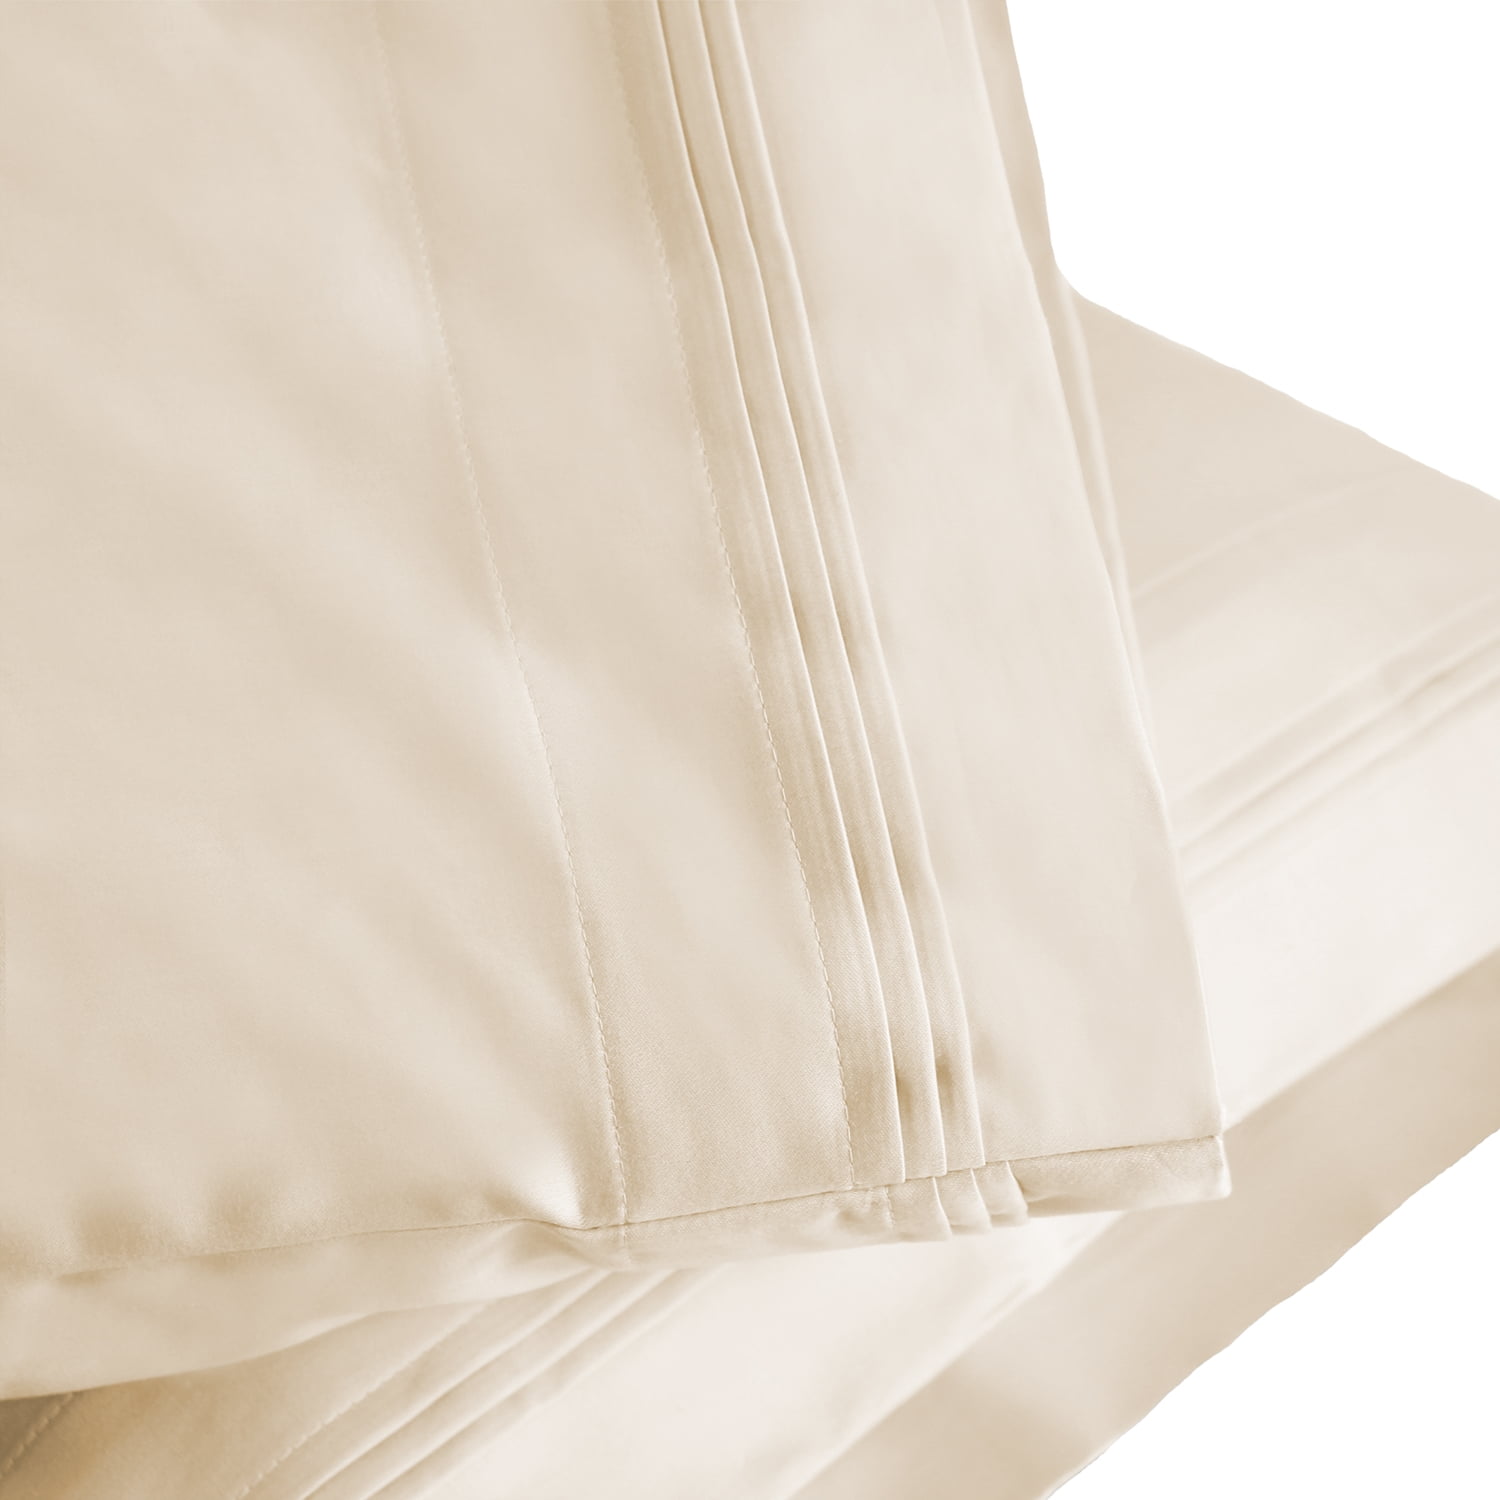 2 cotton bay king pillow cases cotton blend super white lowest price online 